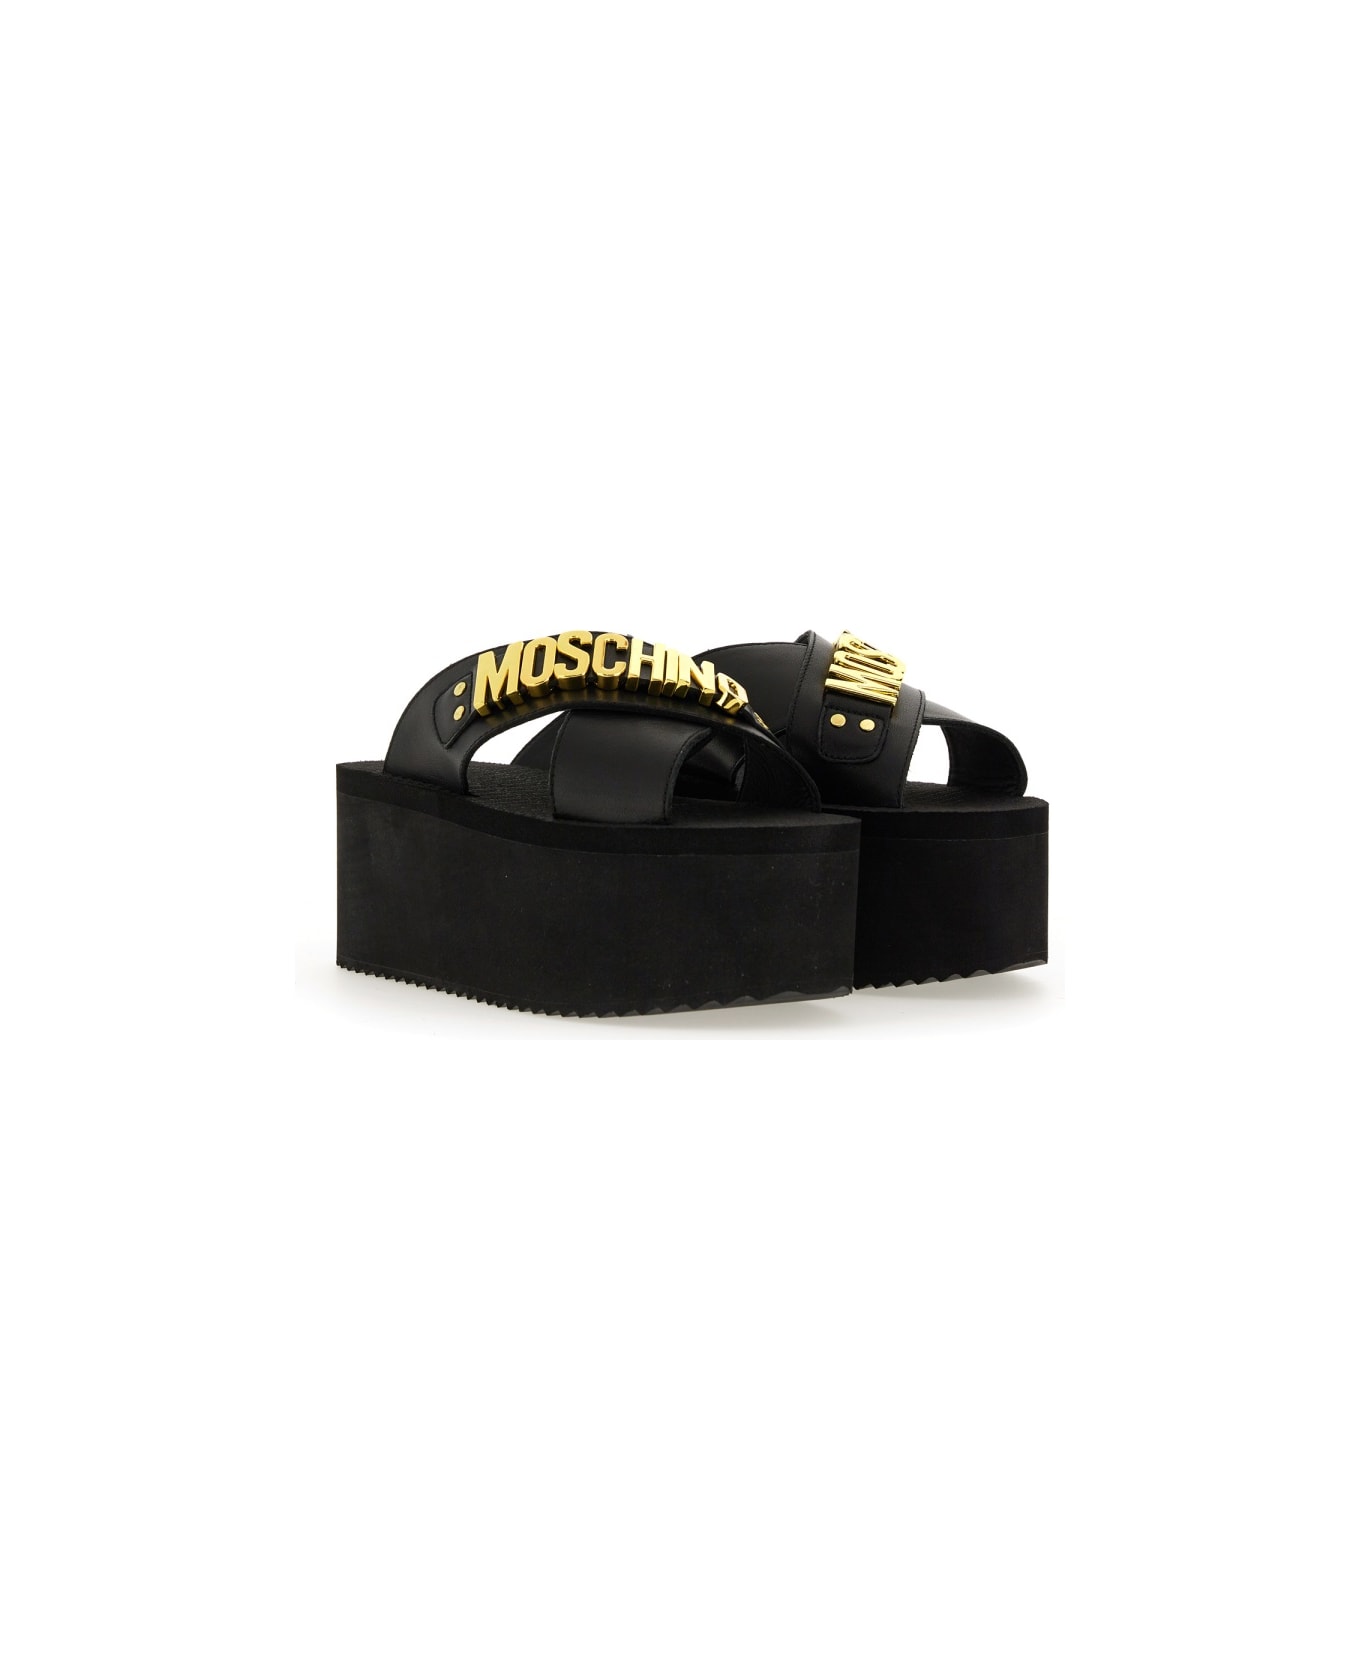 Moschino Wedge Sandals - BLACK サンダル